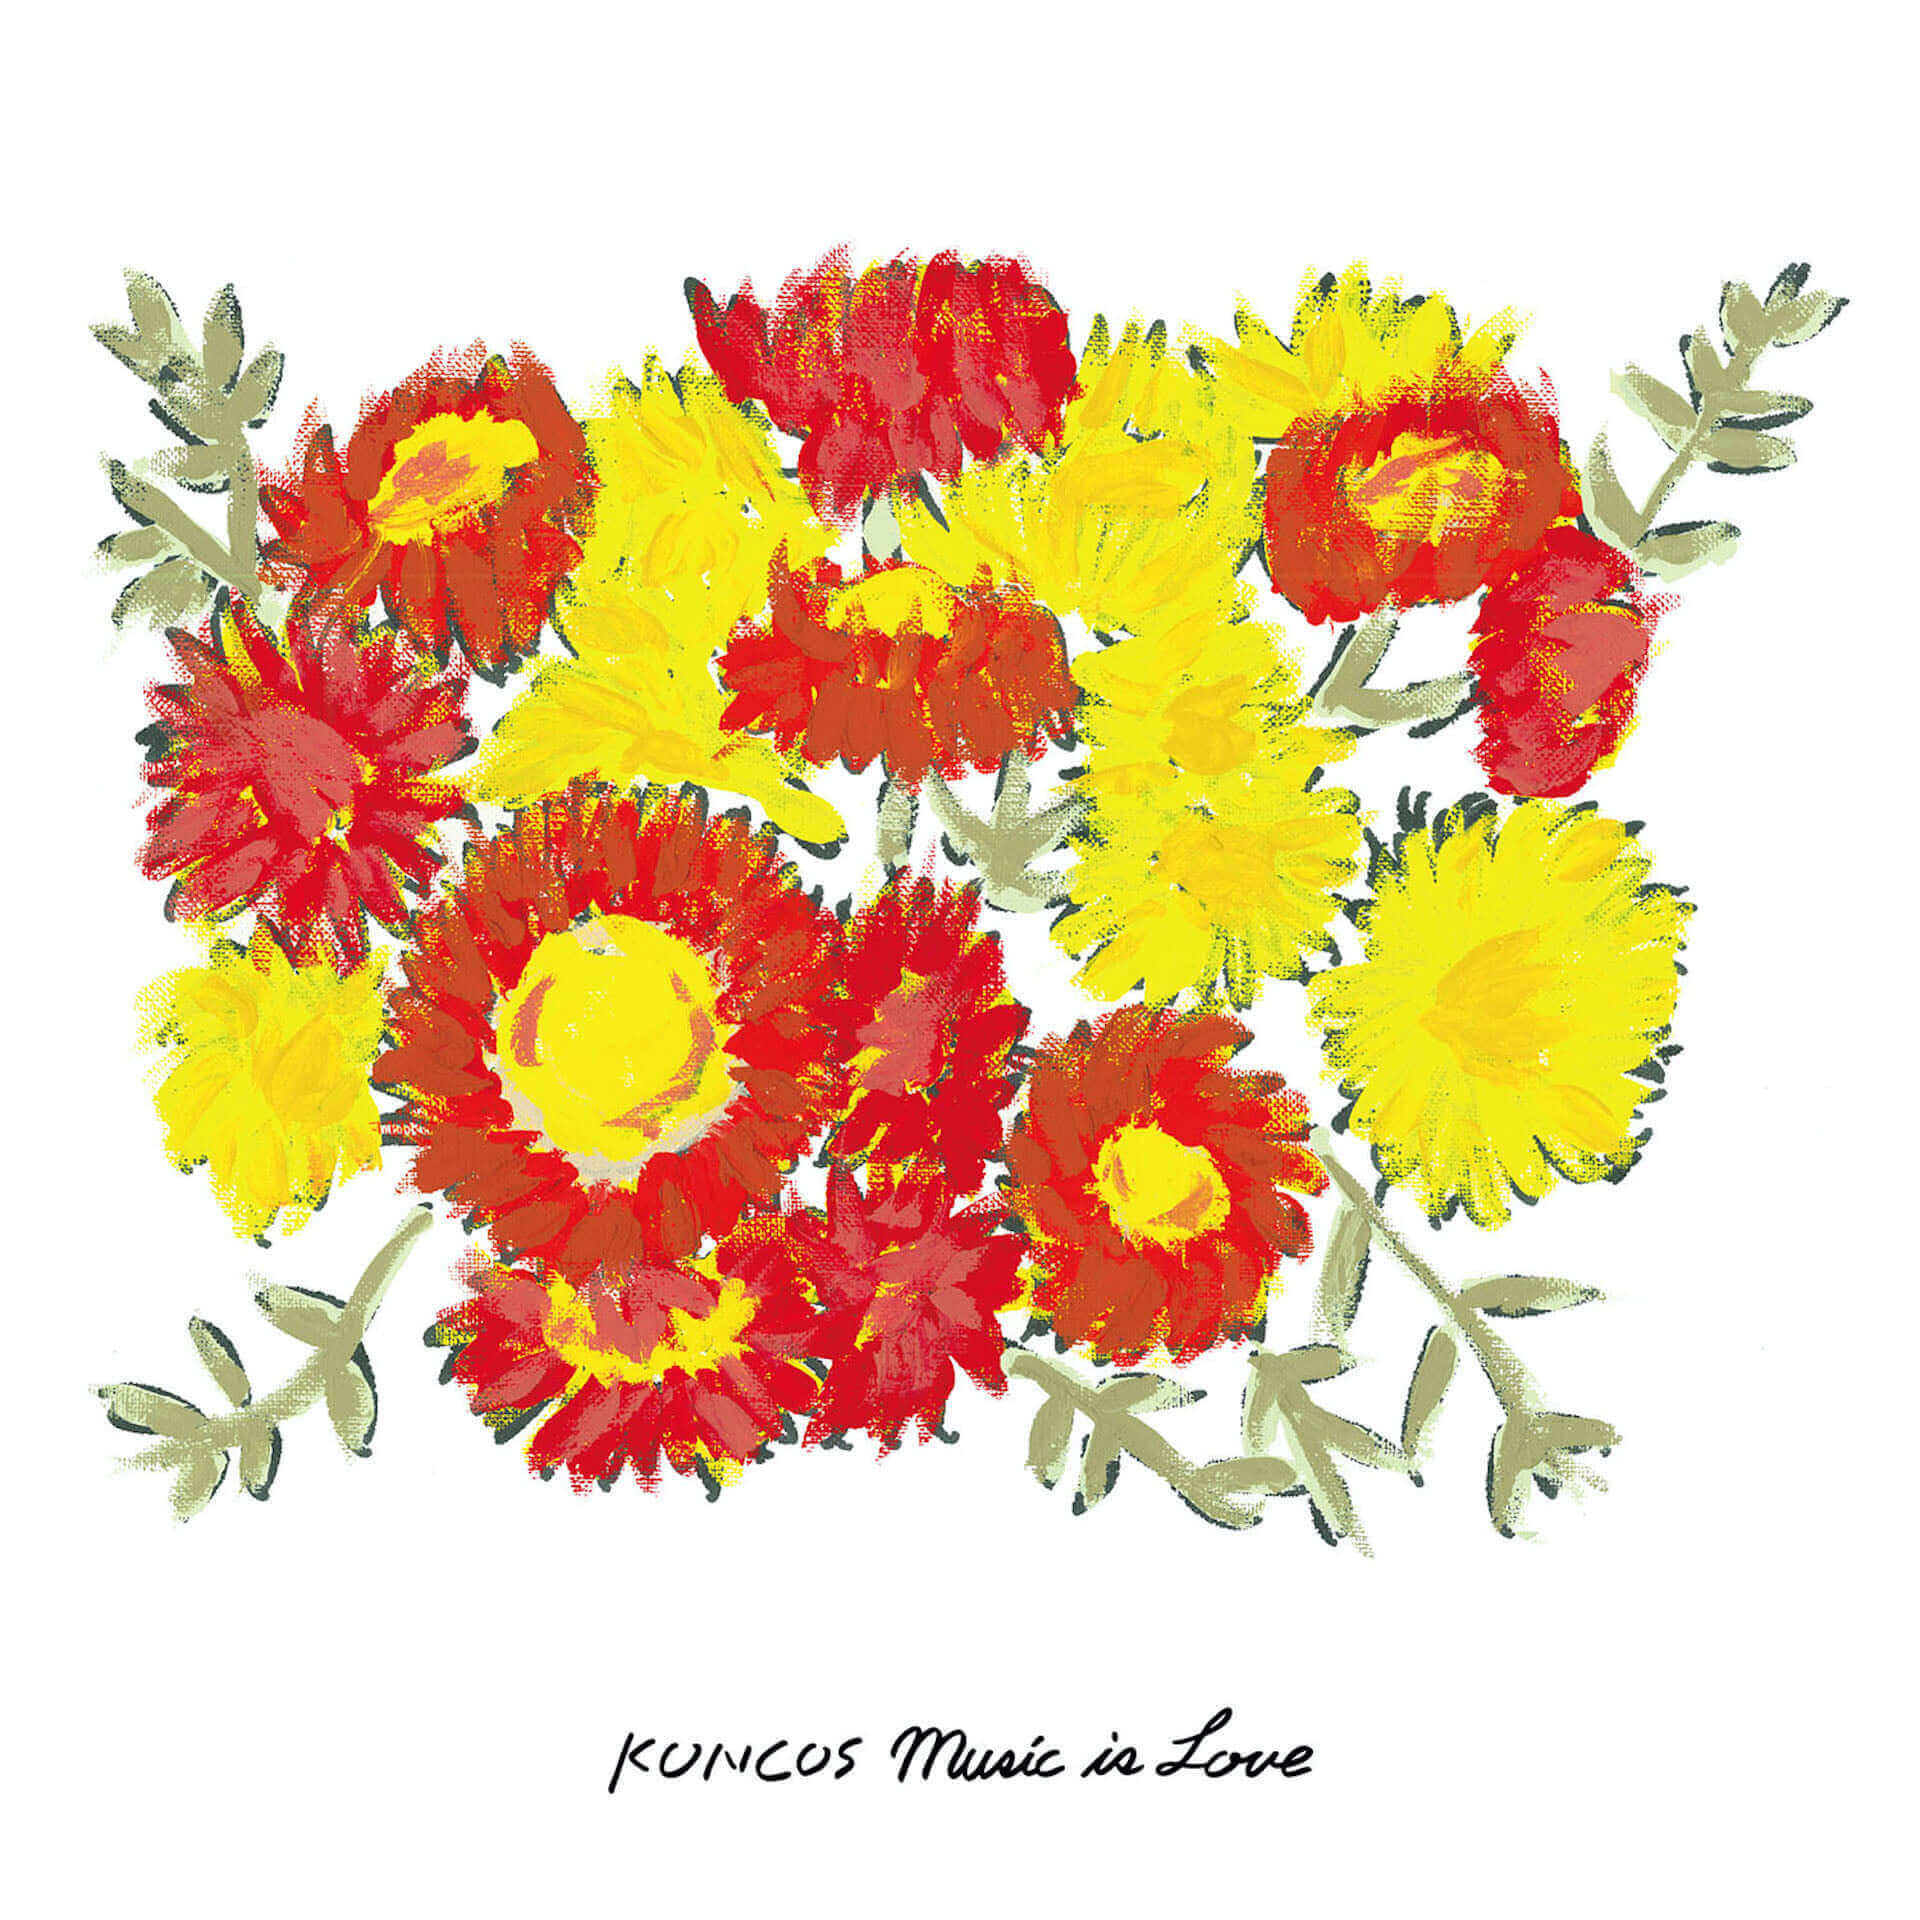 KONCOSのTaichi Furukawaが新作『Music Is Love』のために描いた花の絵の展示を開催決定！ culture210817_music_is_love2